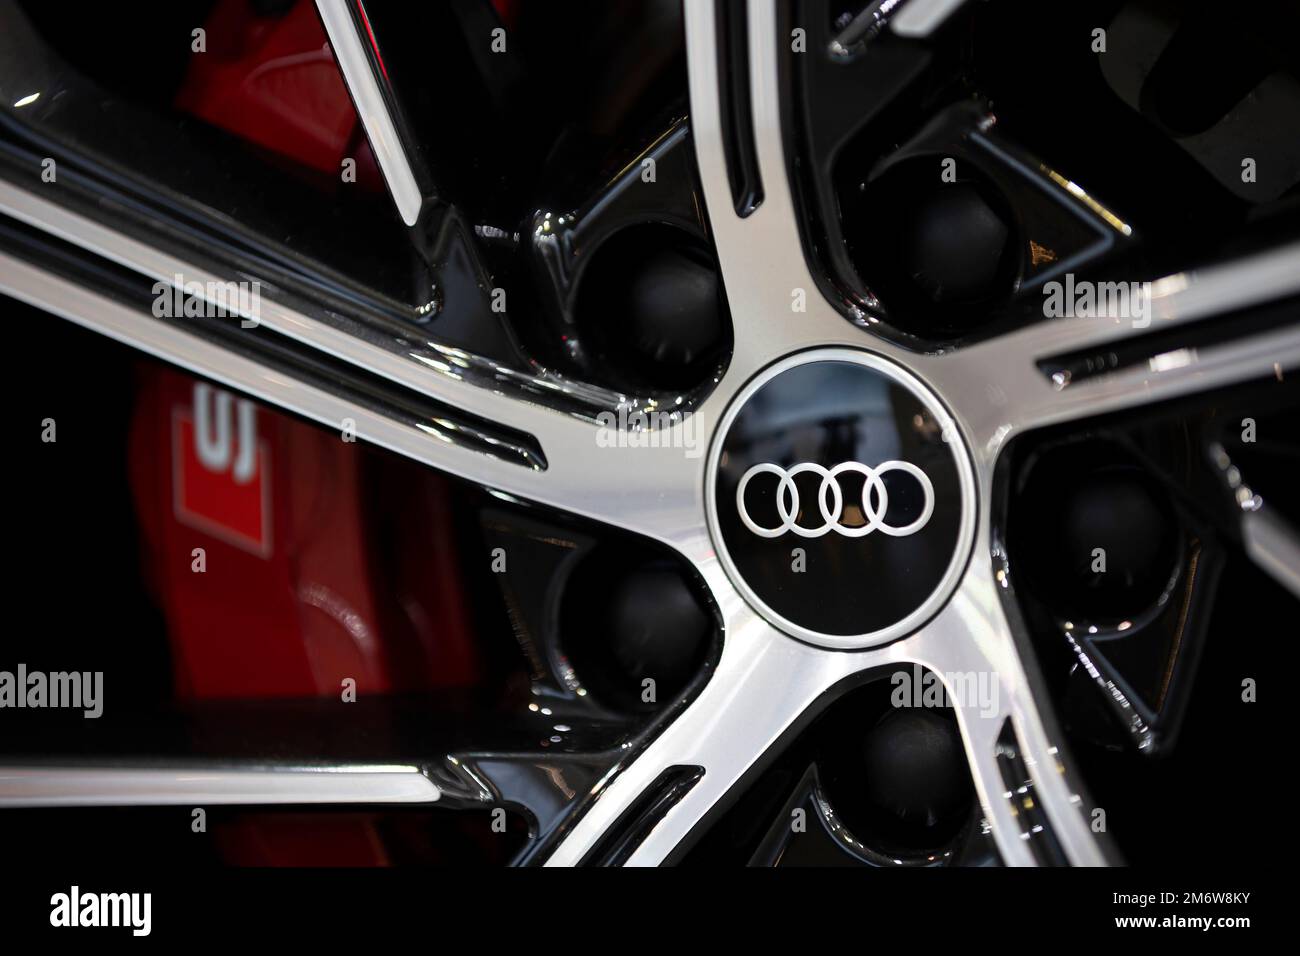 Audi logo emblem sign Stock Photo - Alamy